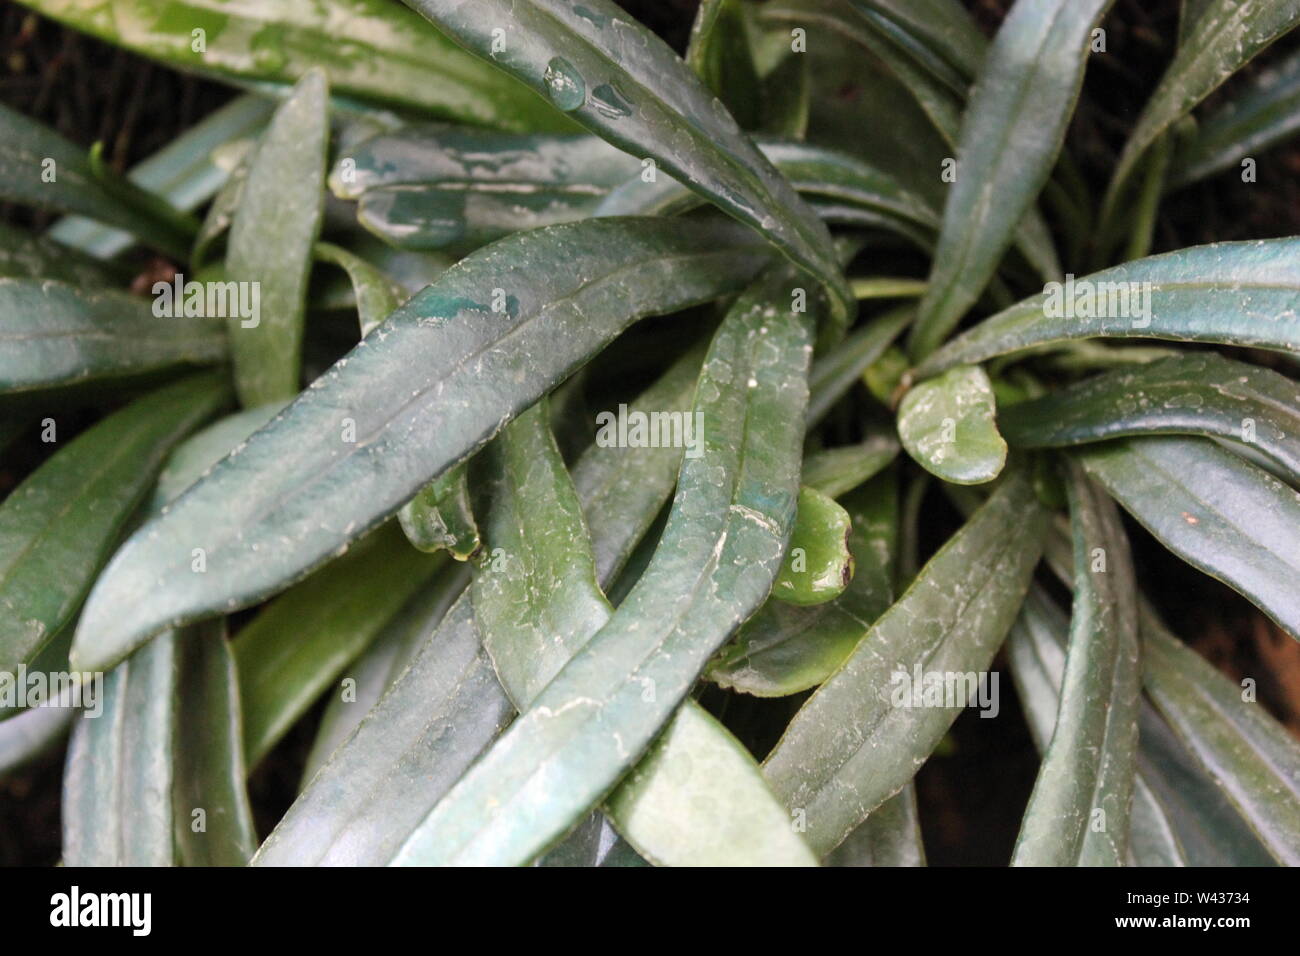 Very rare and unusual blue fern, oil fern, microsorum steerii, Microsorum thailandicum, Blue Strap Fern, Cobalt Fern, Scarab Fern, often seen in a night garden. Stock Photo